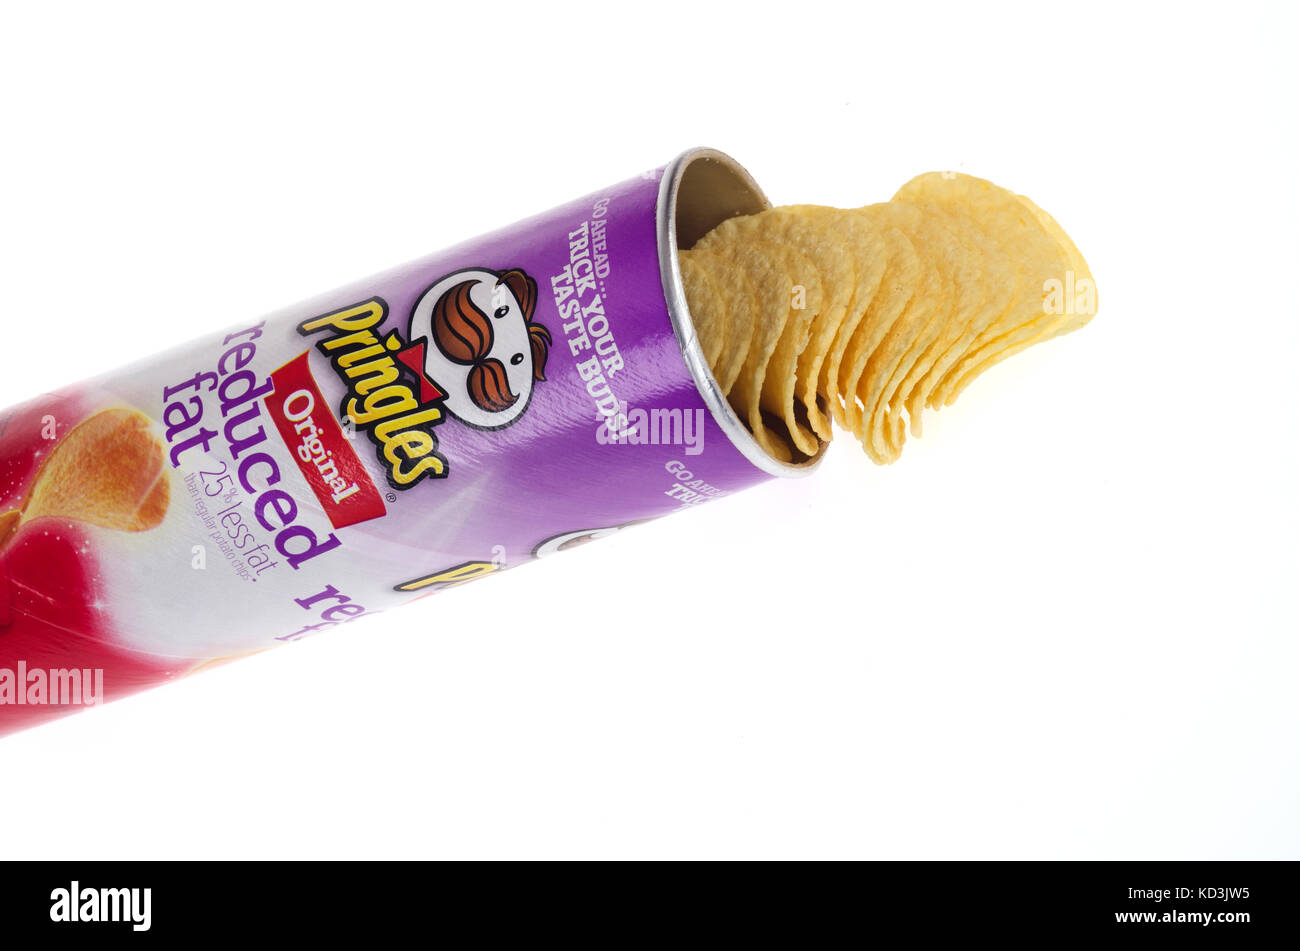 Open tin of Pringles Reduced Fat Original crisps on white background cutout, USA Stock Photo